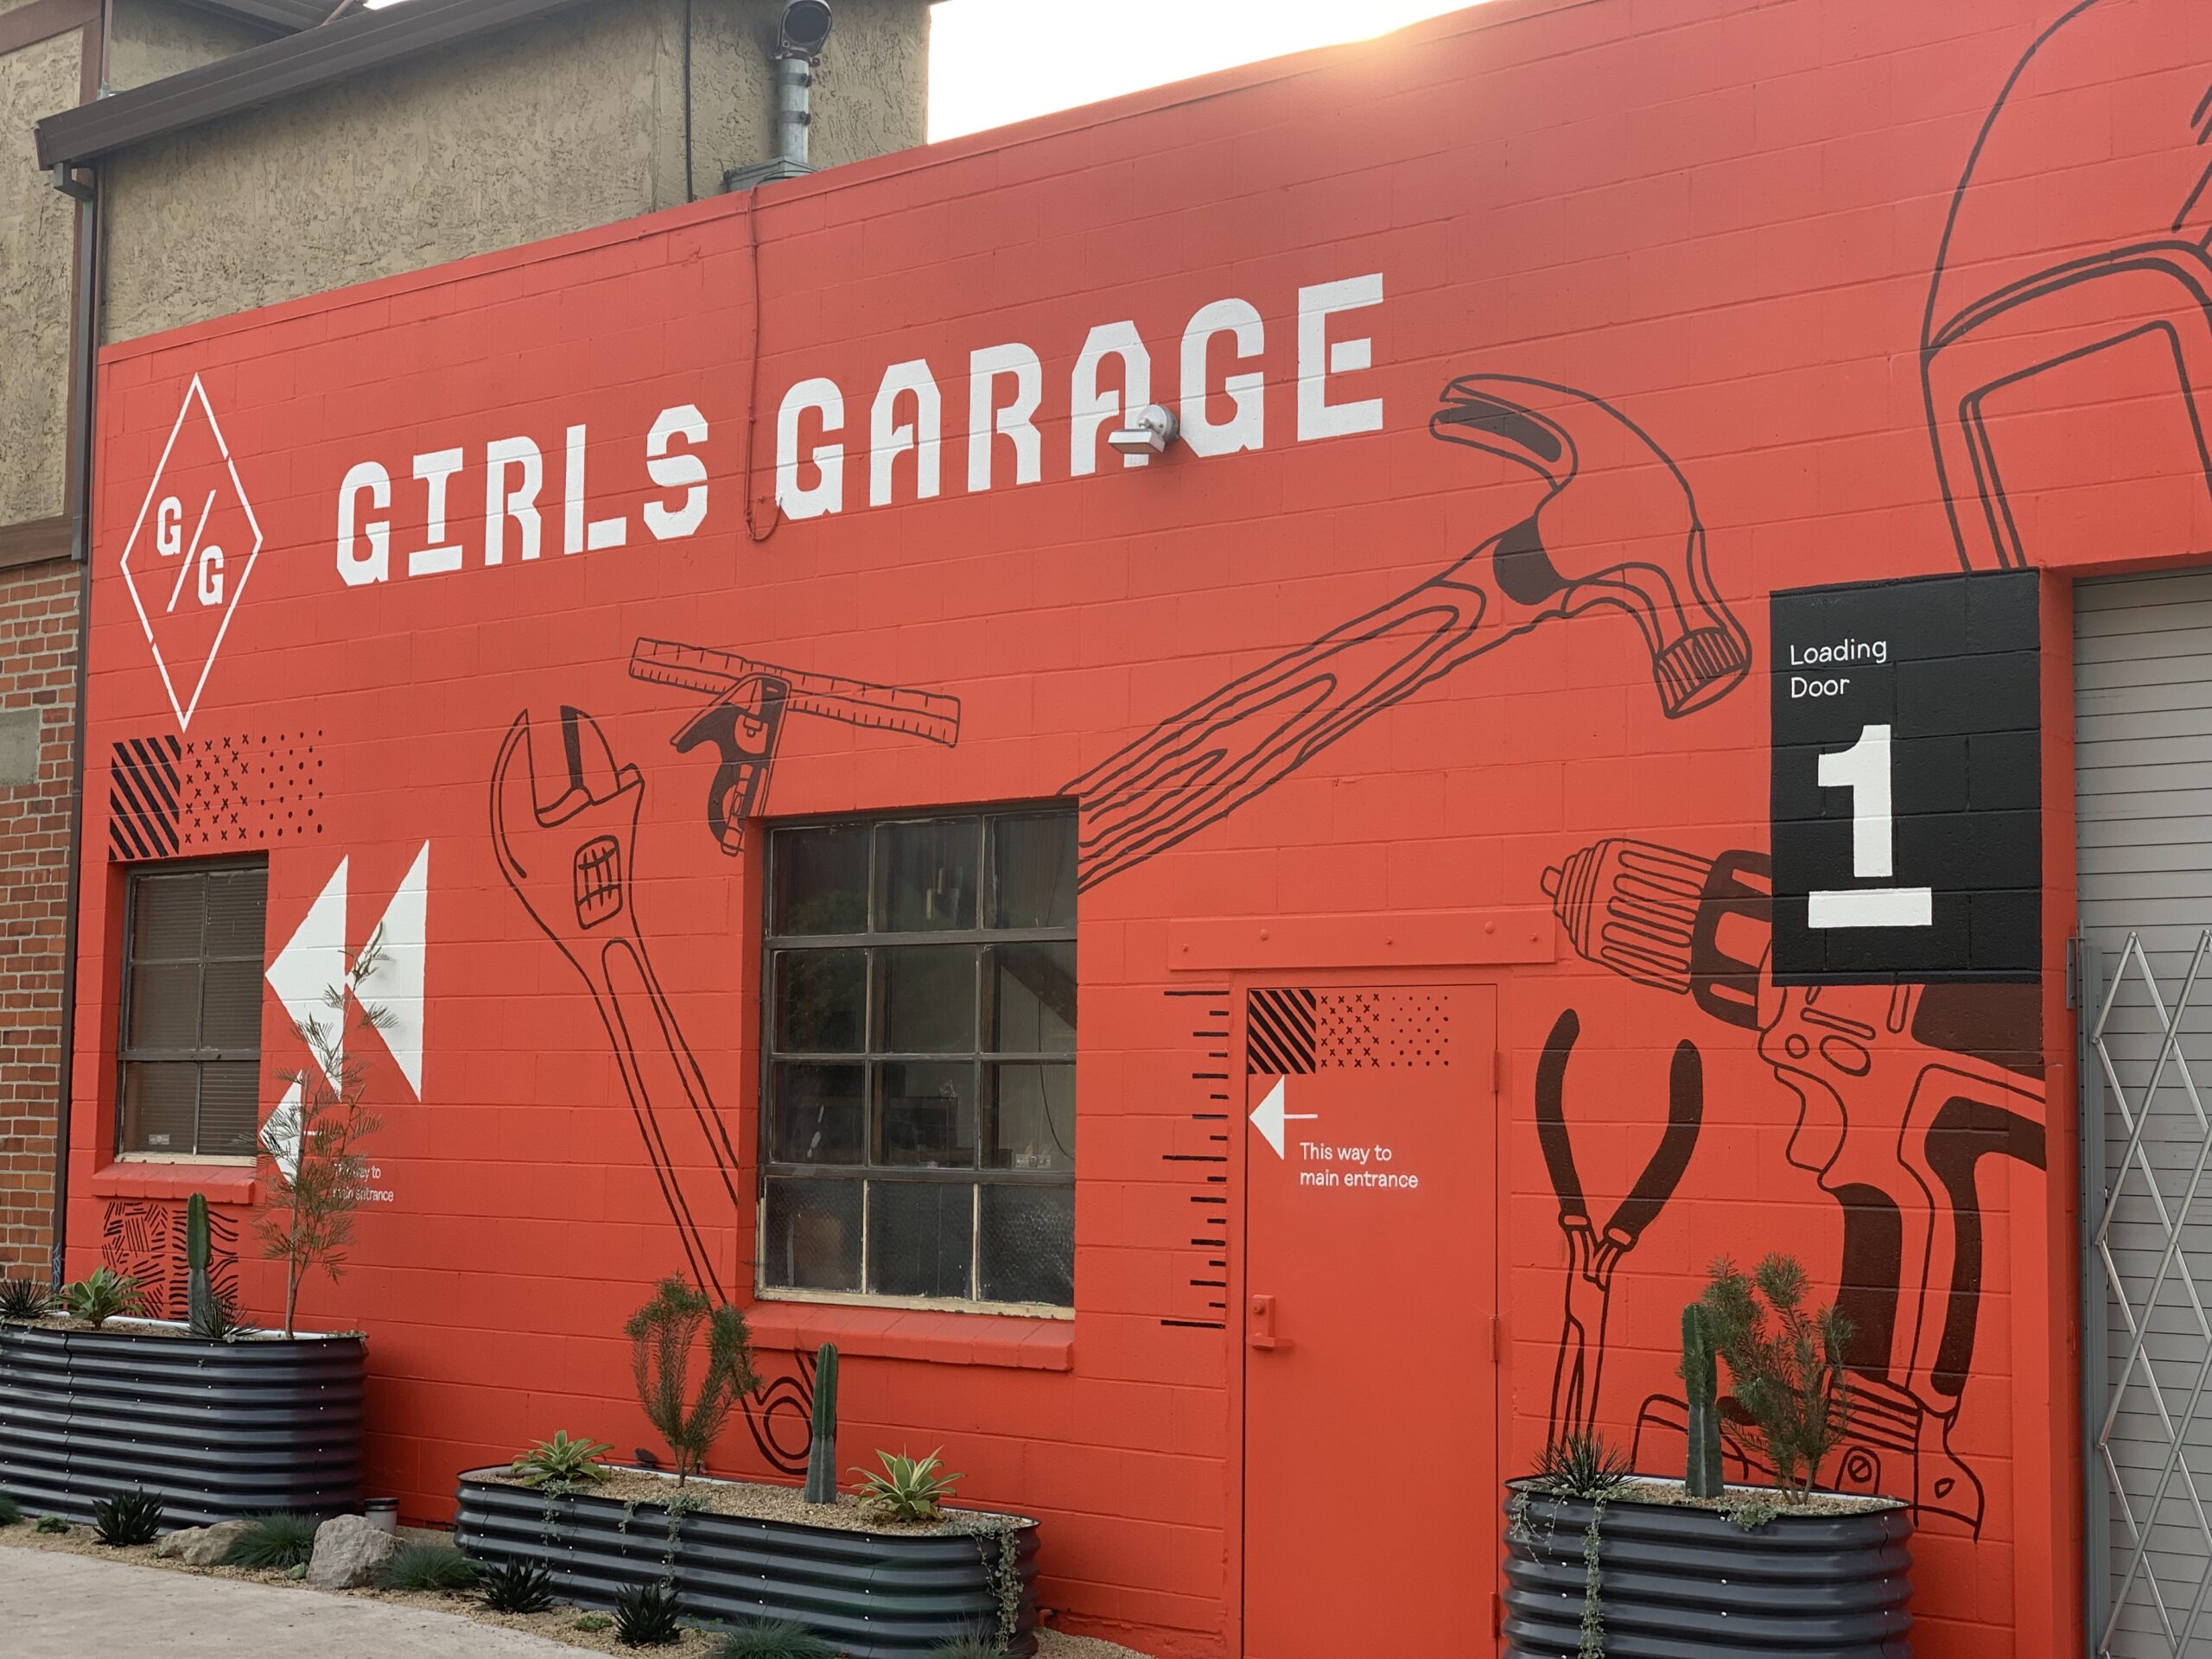 Exterior signage at Girls Garage